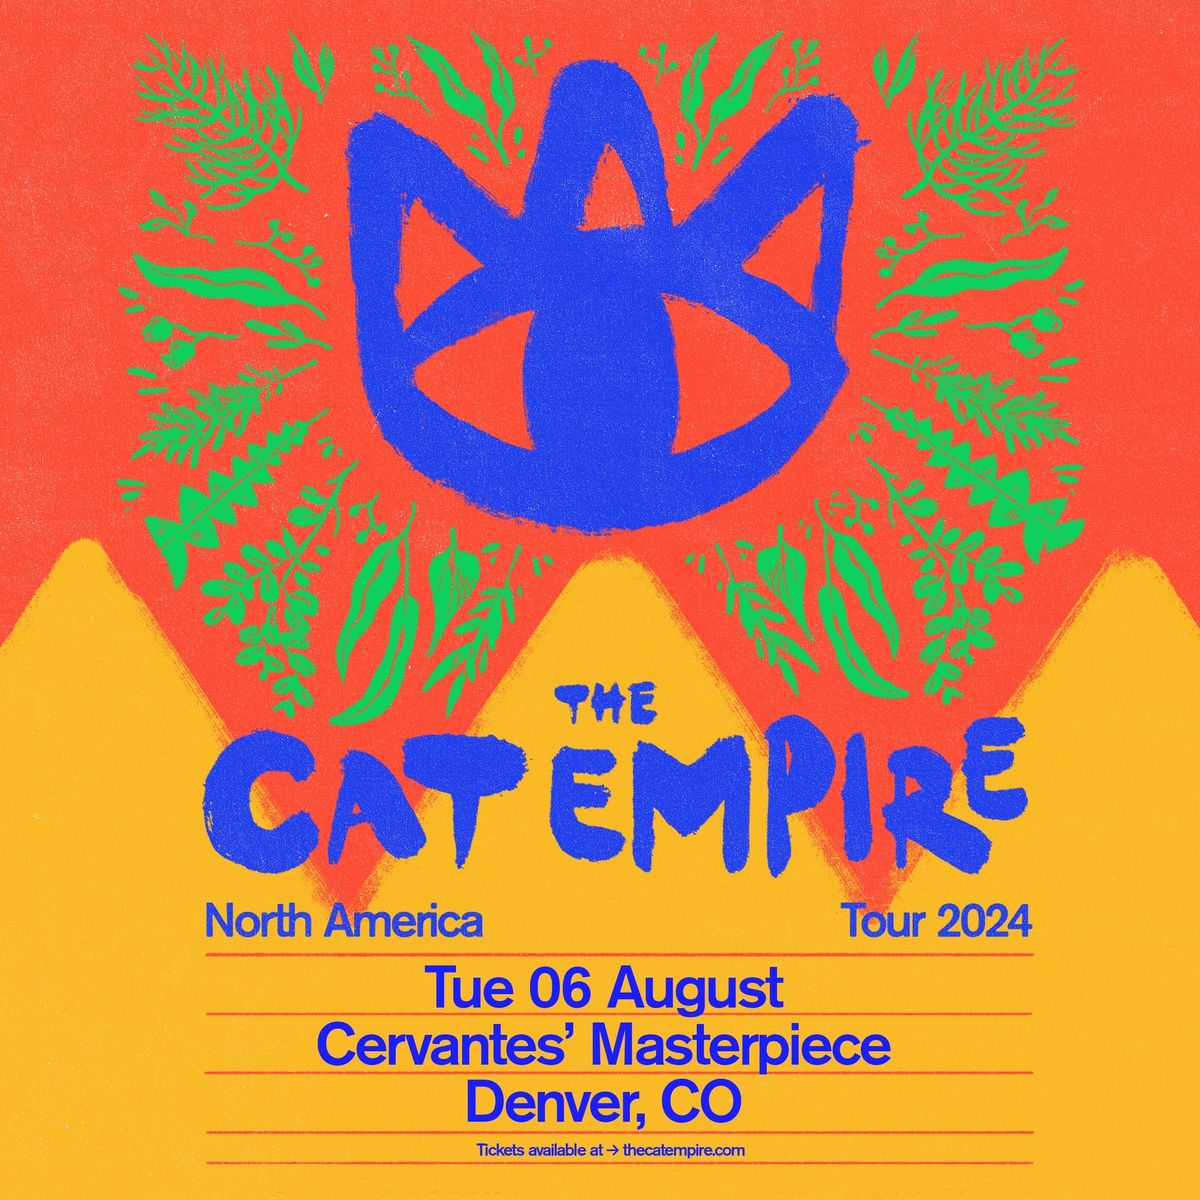 The Cat Empire - North America Tour 2024 